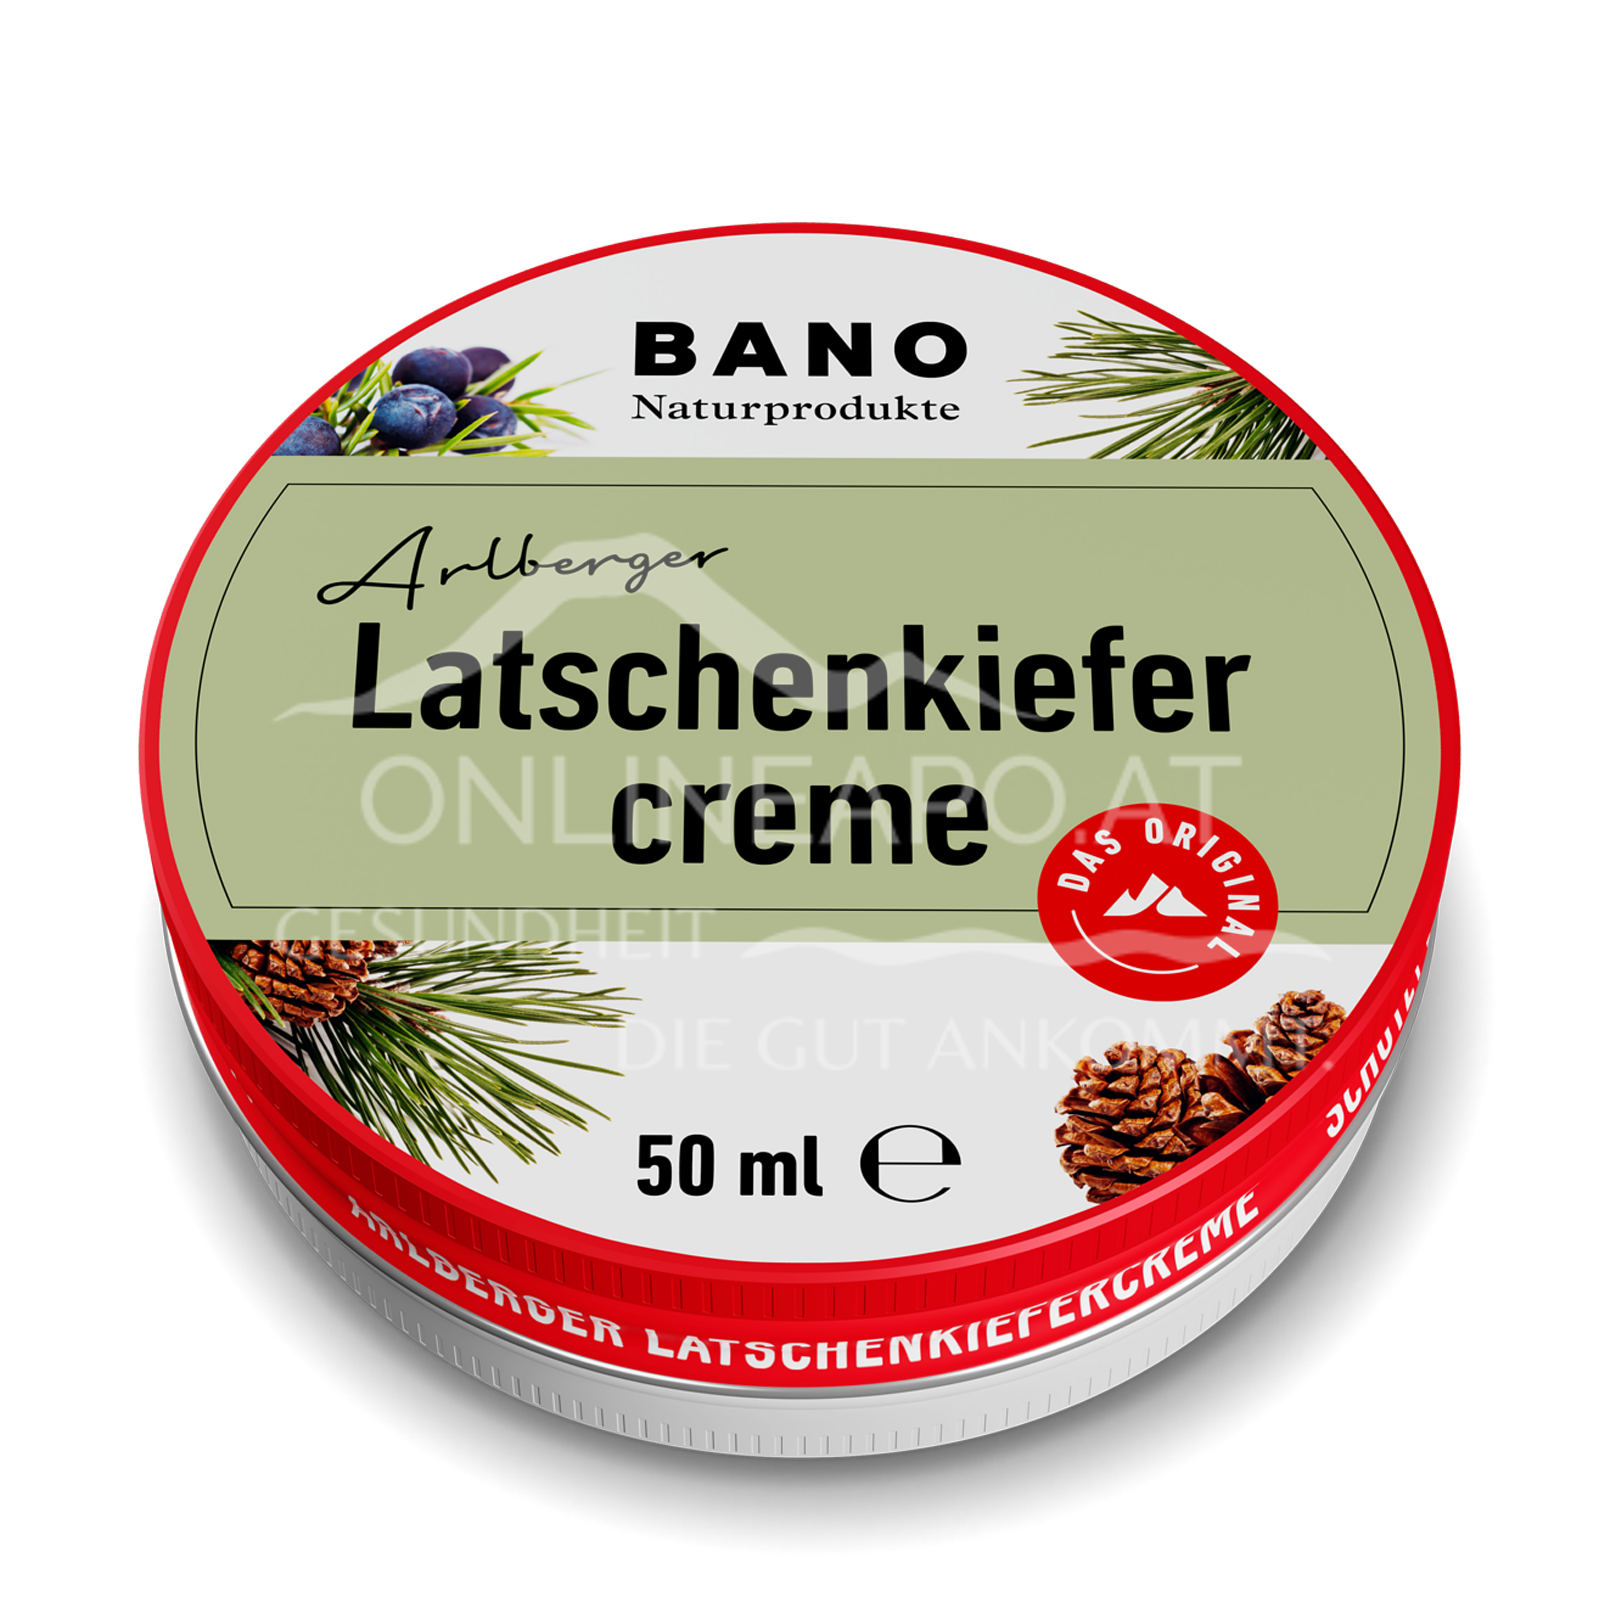 BANO Arlberger Latschenkiefercreme